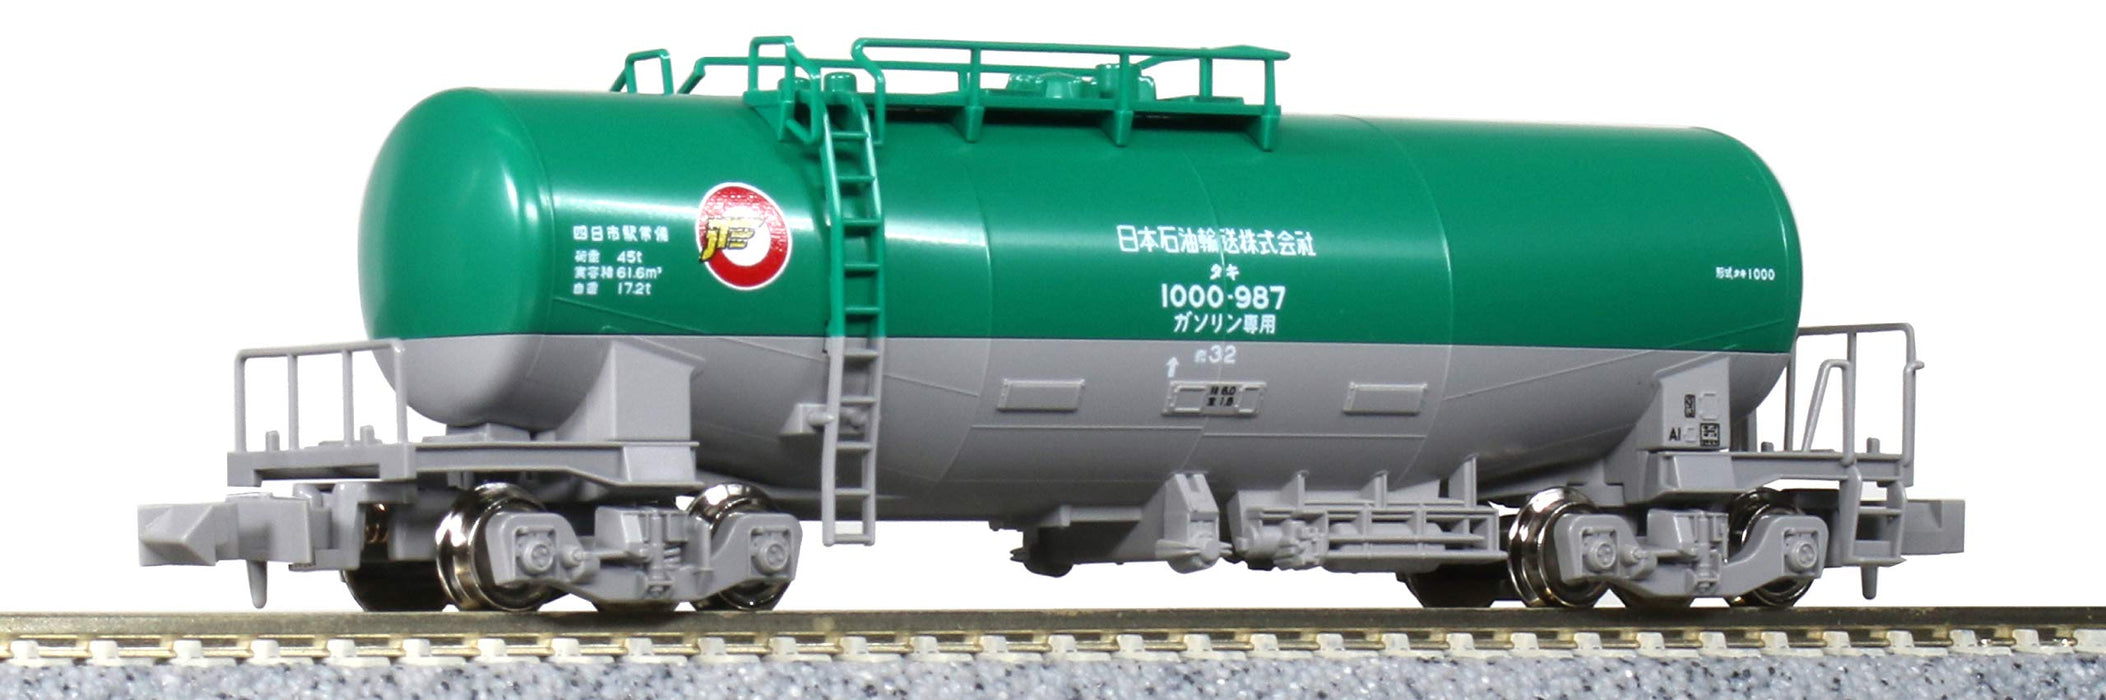 Kato N Gauge Taki 1000 Late 8081 Nippon Oil Transport Railway Freight Car Model